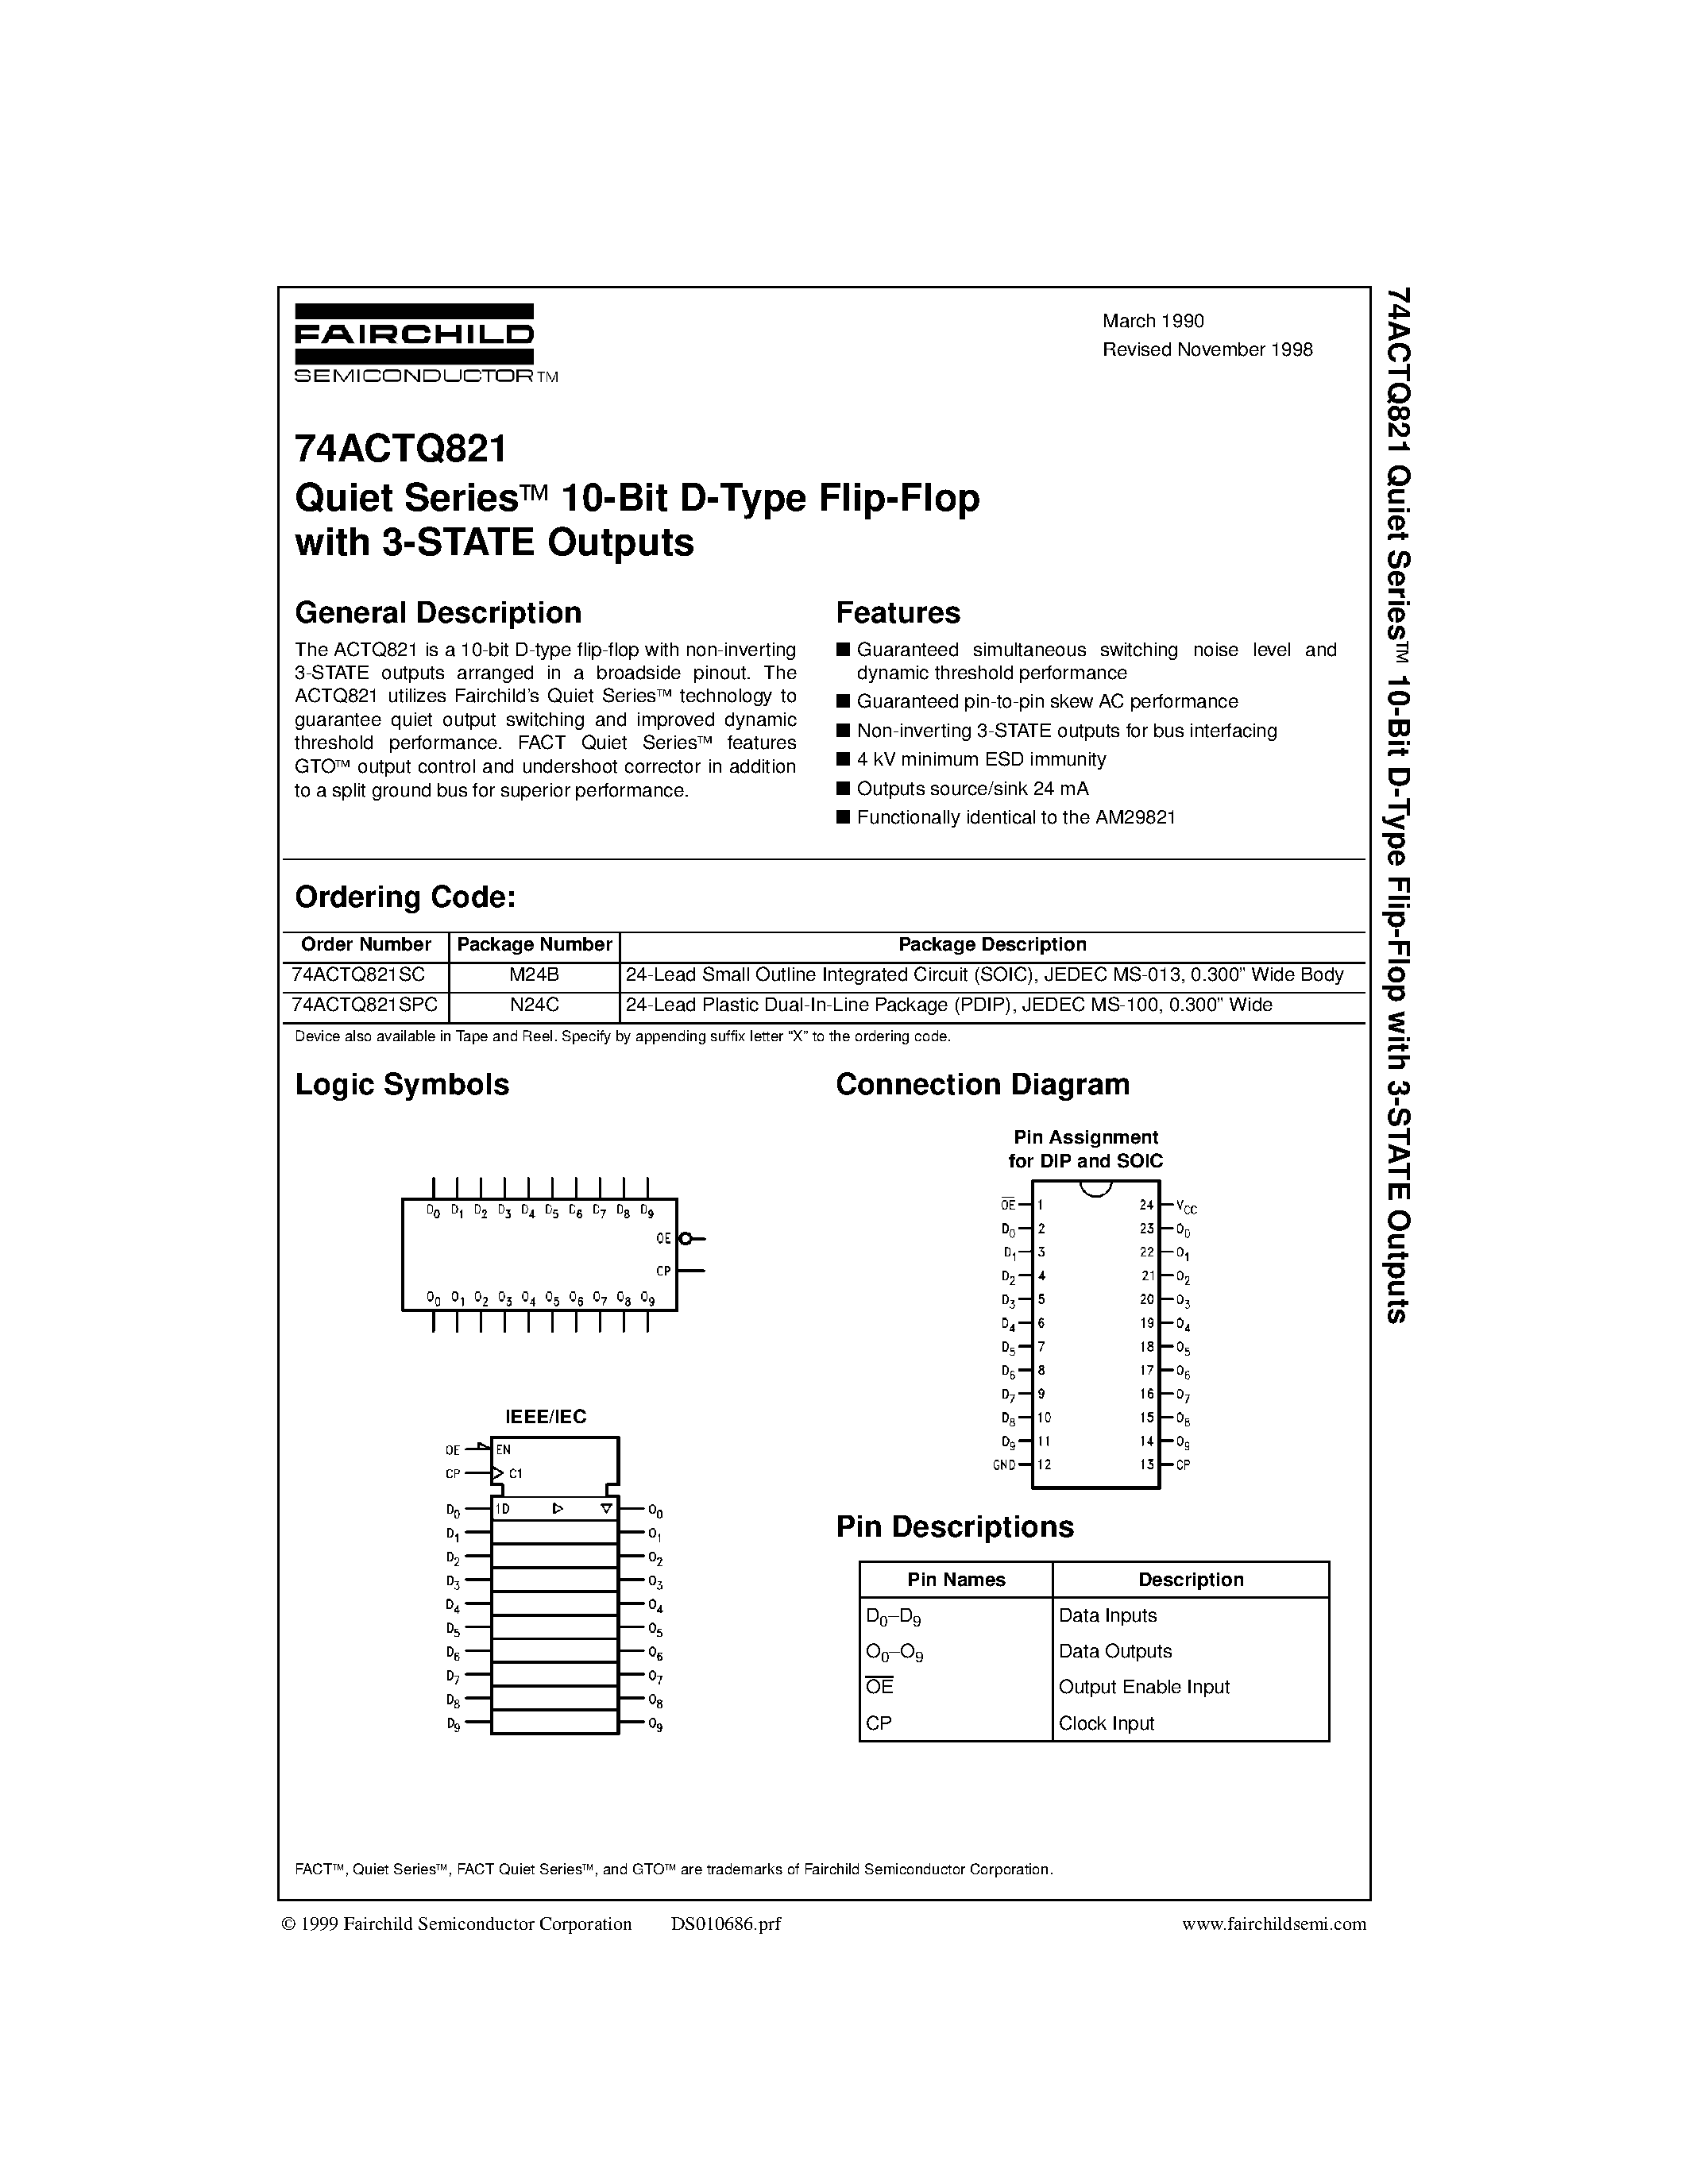 Datasheet 74ACTQ821 - Quiet Seriesa 10-Bit D-Type Flip-Flop with 3-STATE Outputs page 1